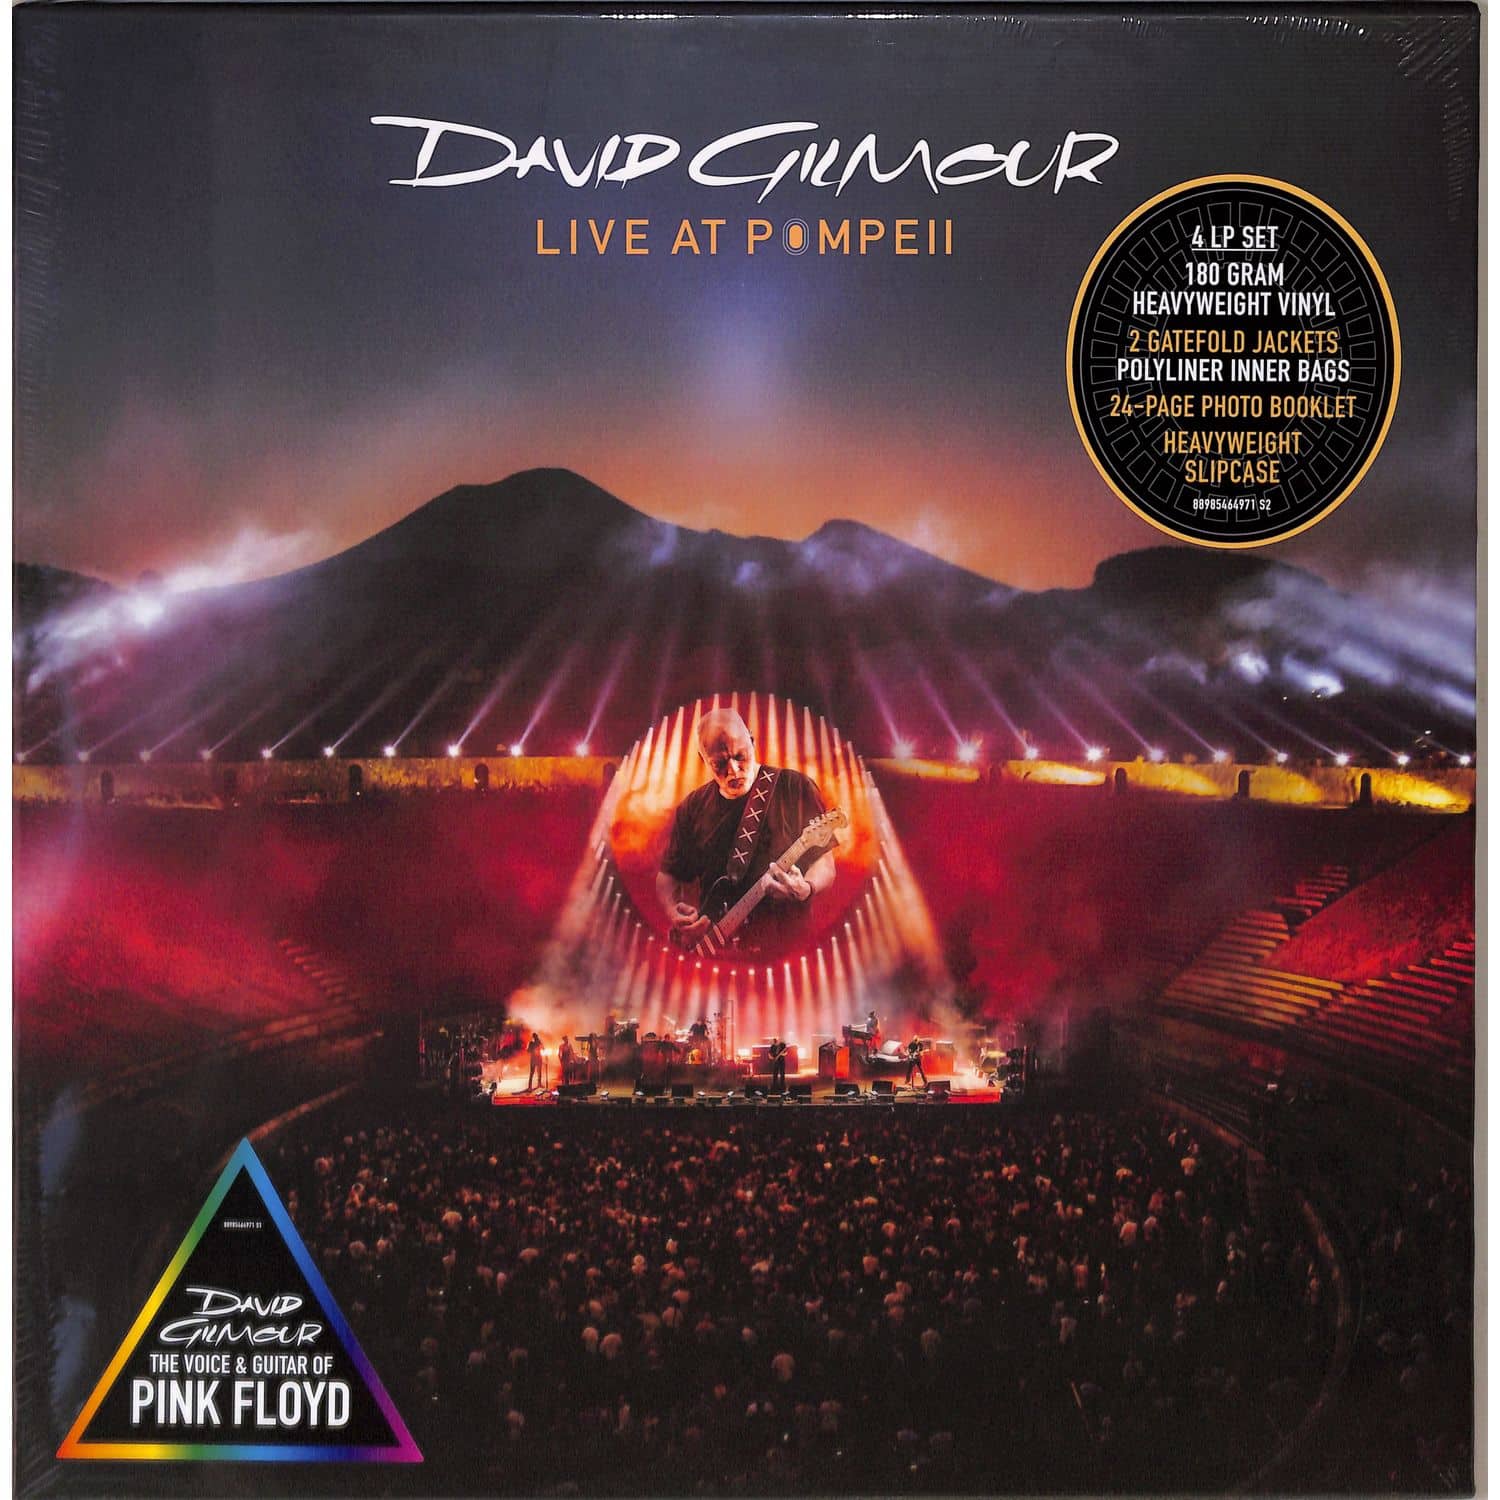 David Gilmour - LIVE AT POMPEII 